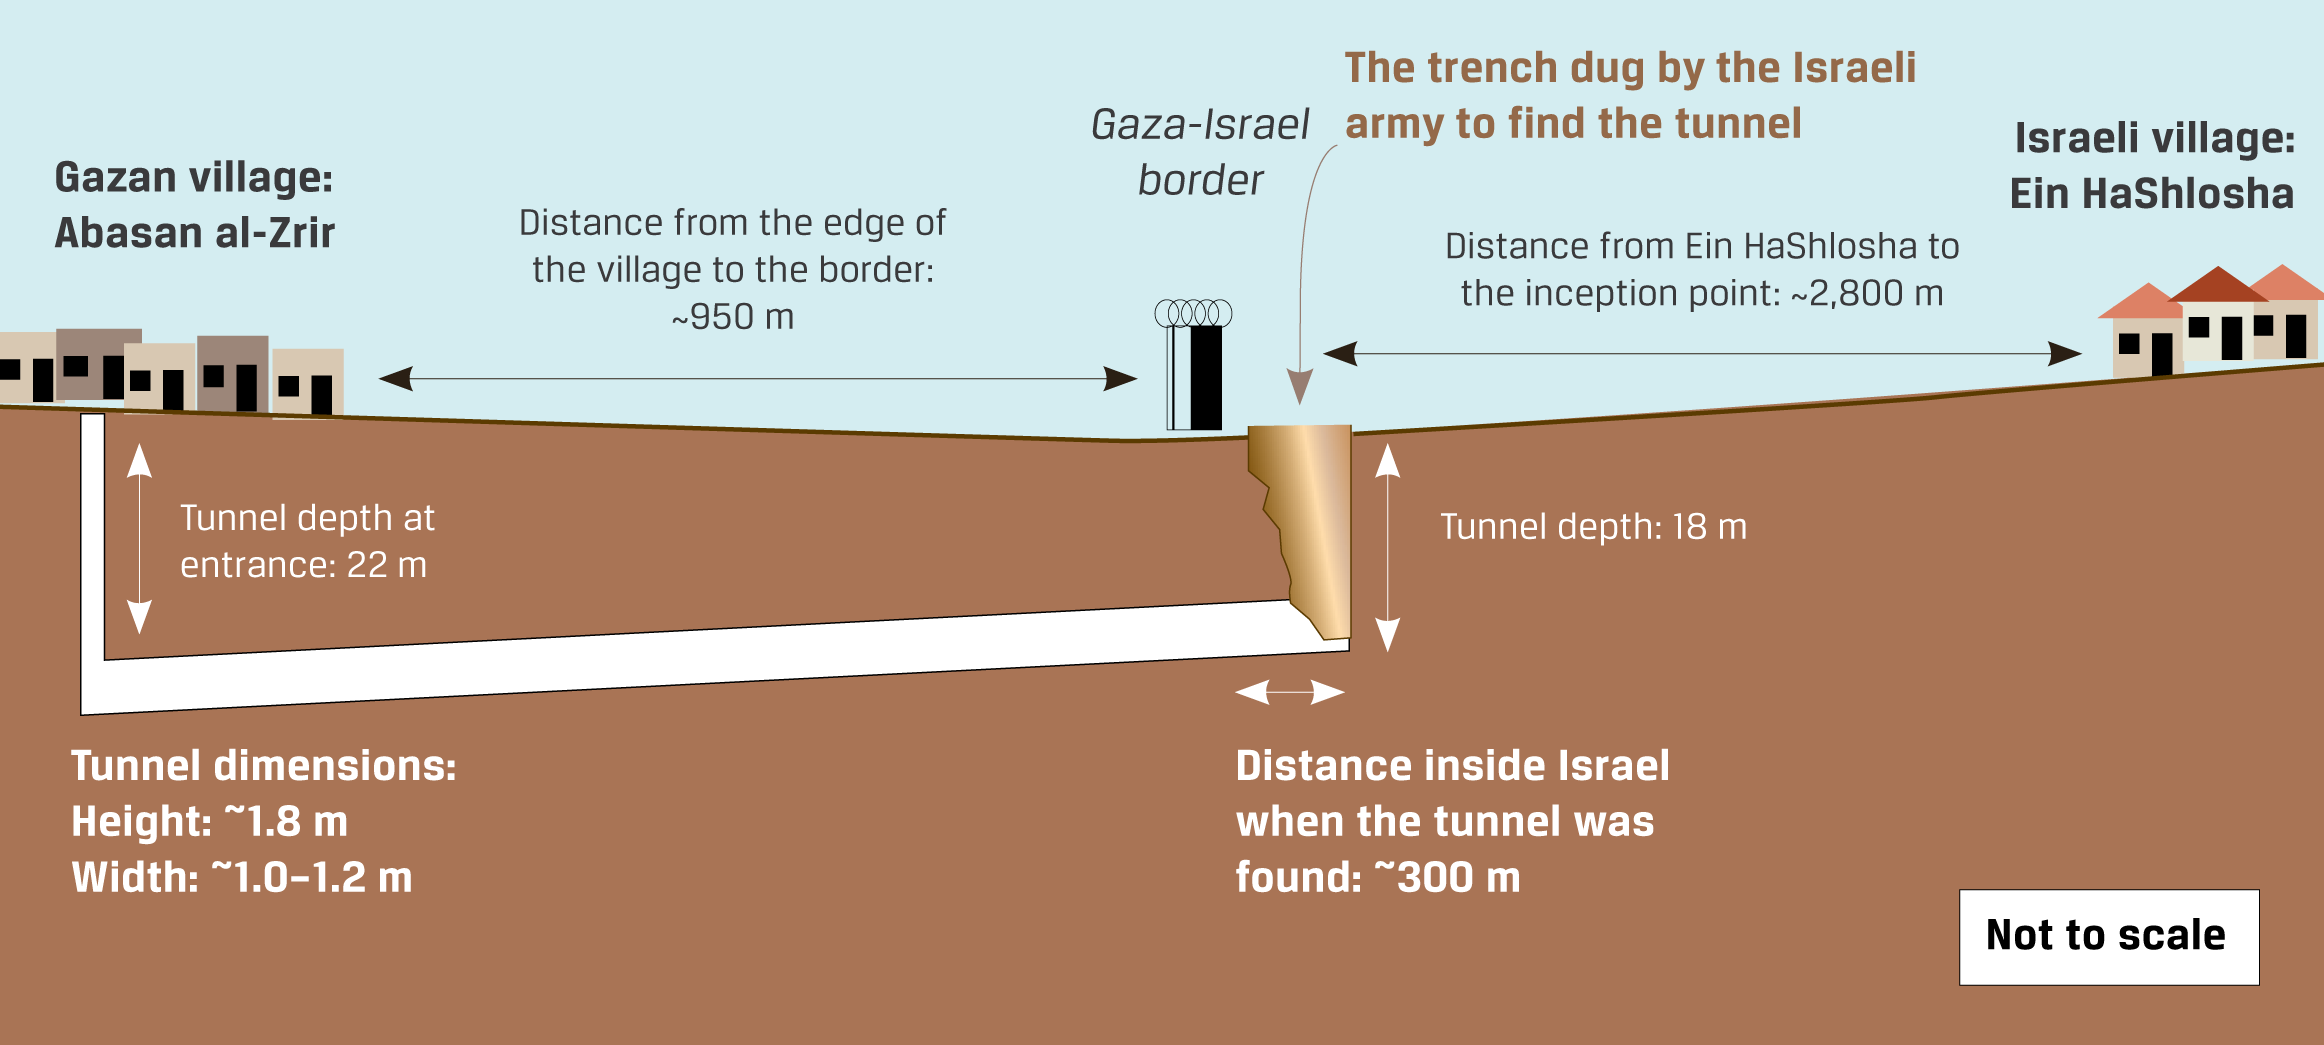 A map depicting a tunnel dug from the Palestinian village of Abasan al-Zrir to the Israeli village of Ein HaShlosha